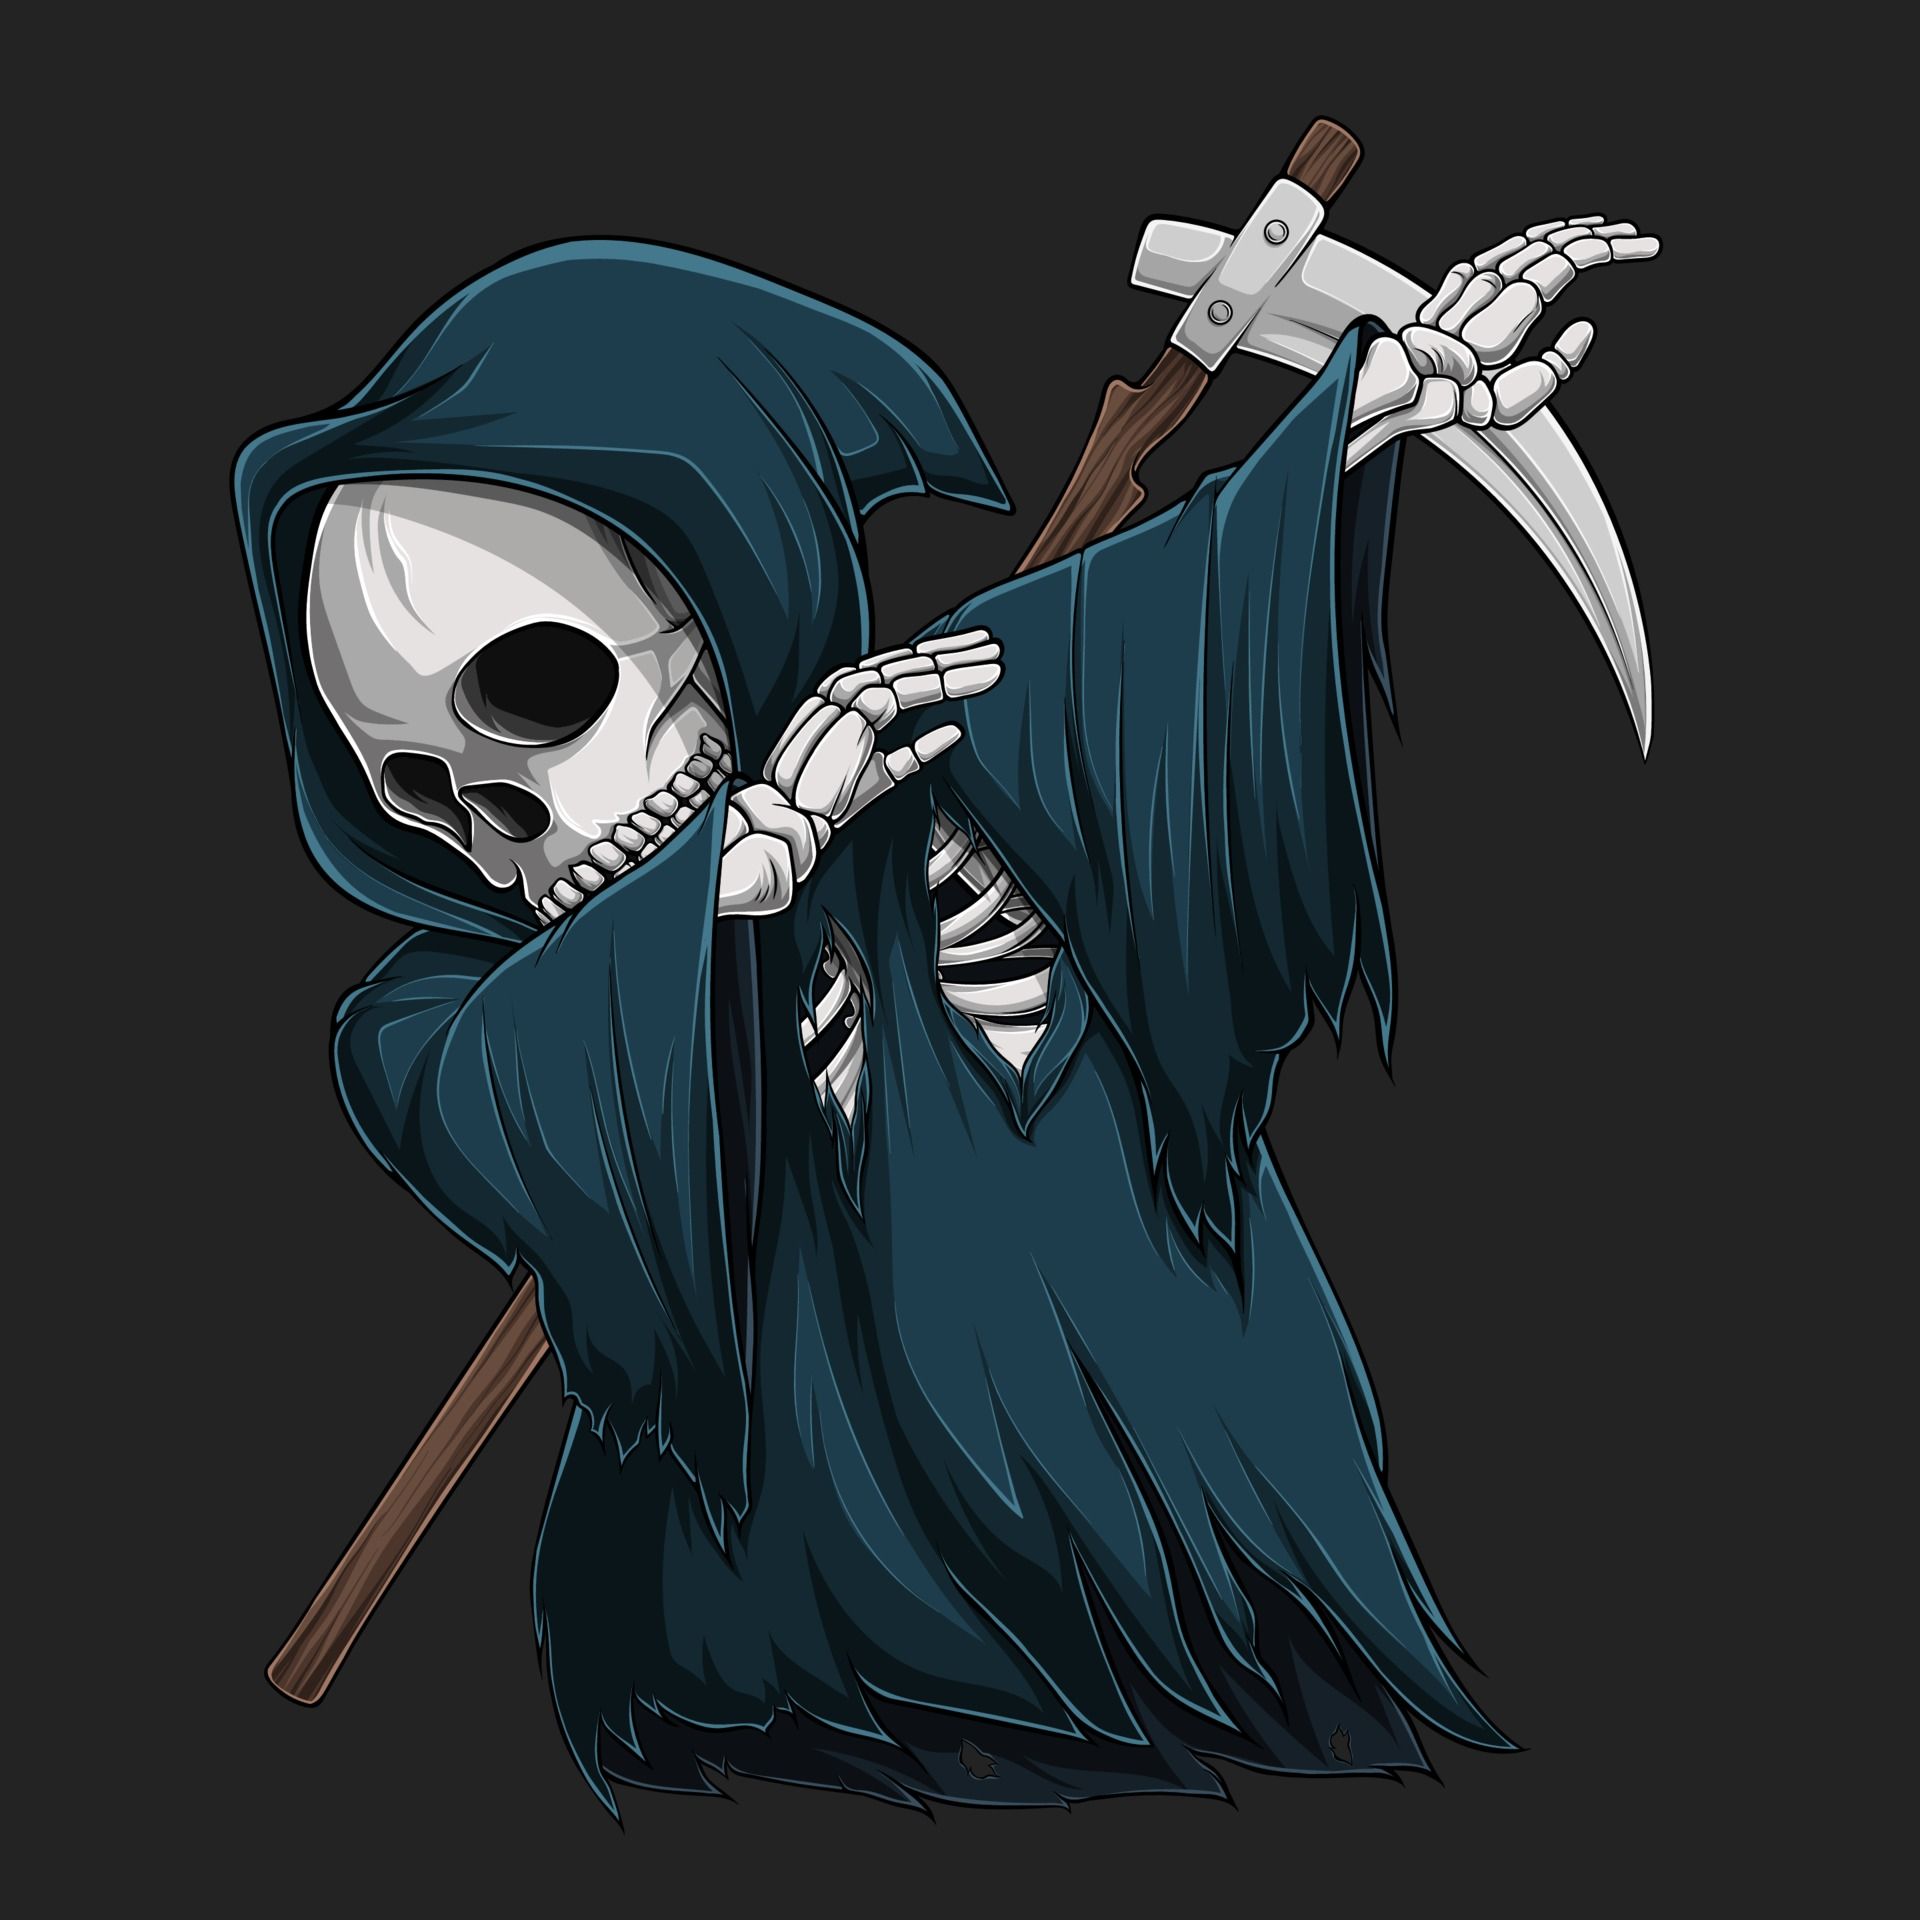 Grim reaper skeleton doing dabbing dance, Halloween character dabbing